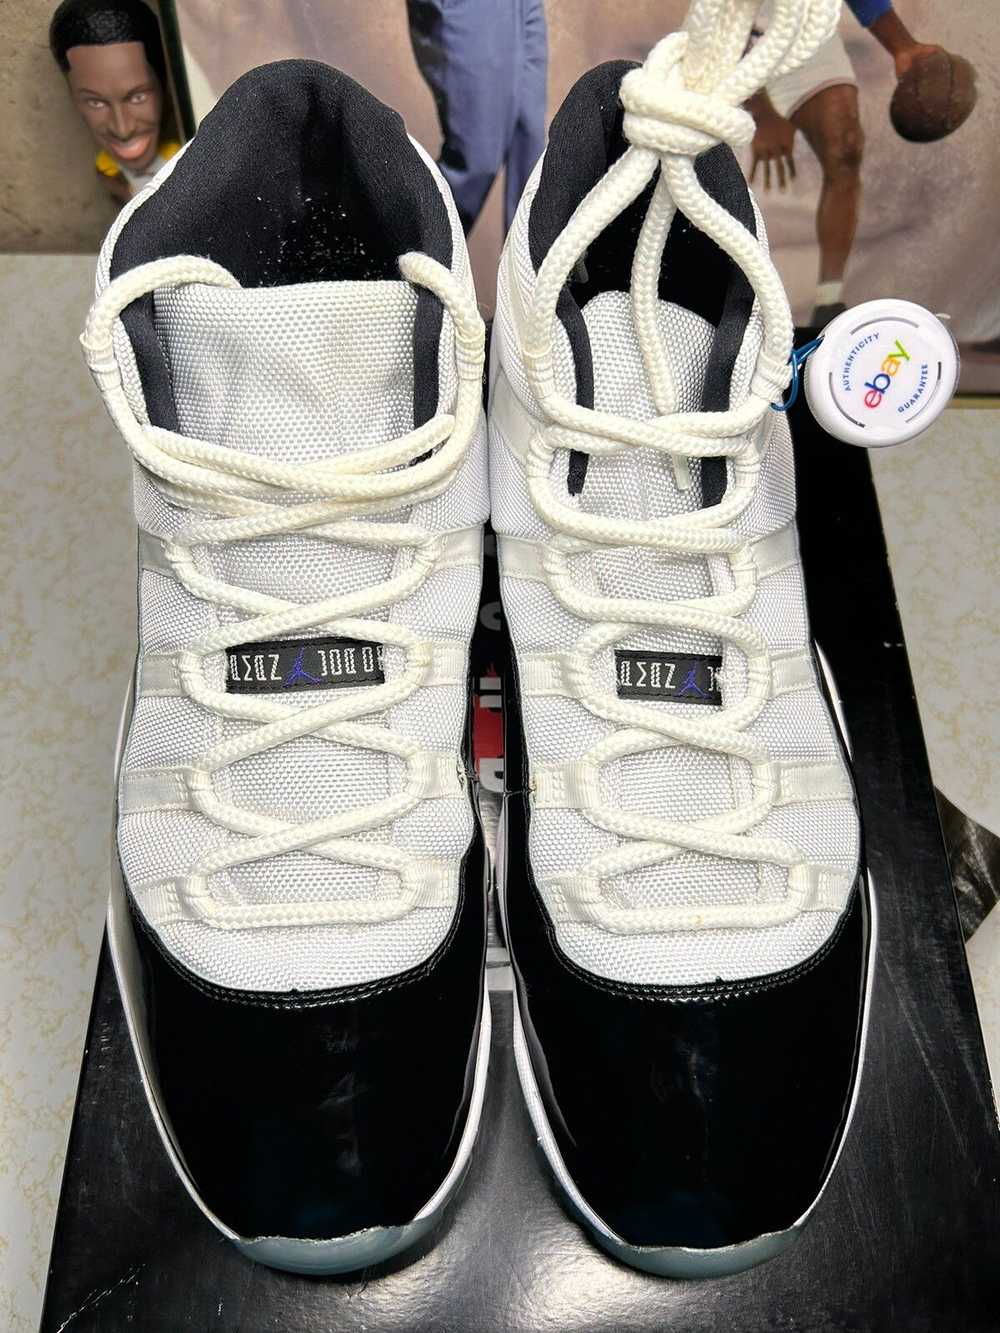 Jordan Brand Jordan Retro 11 ‘concord’ - image 1